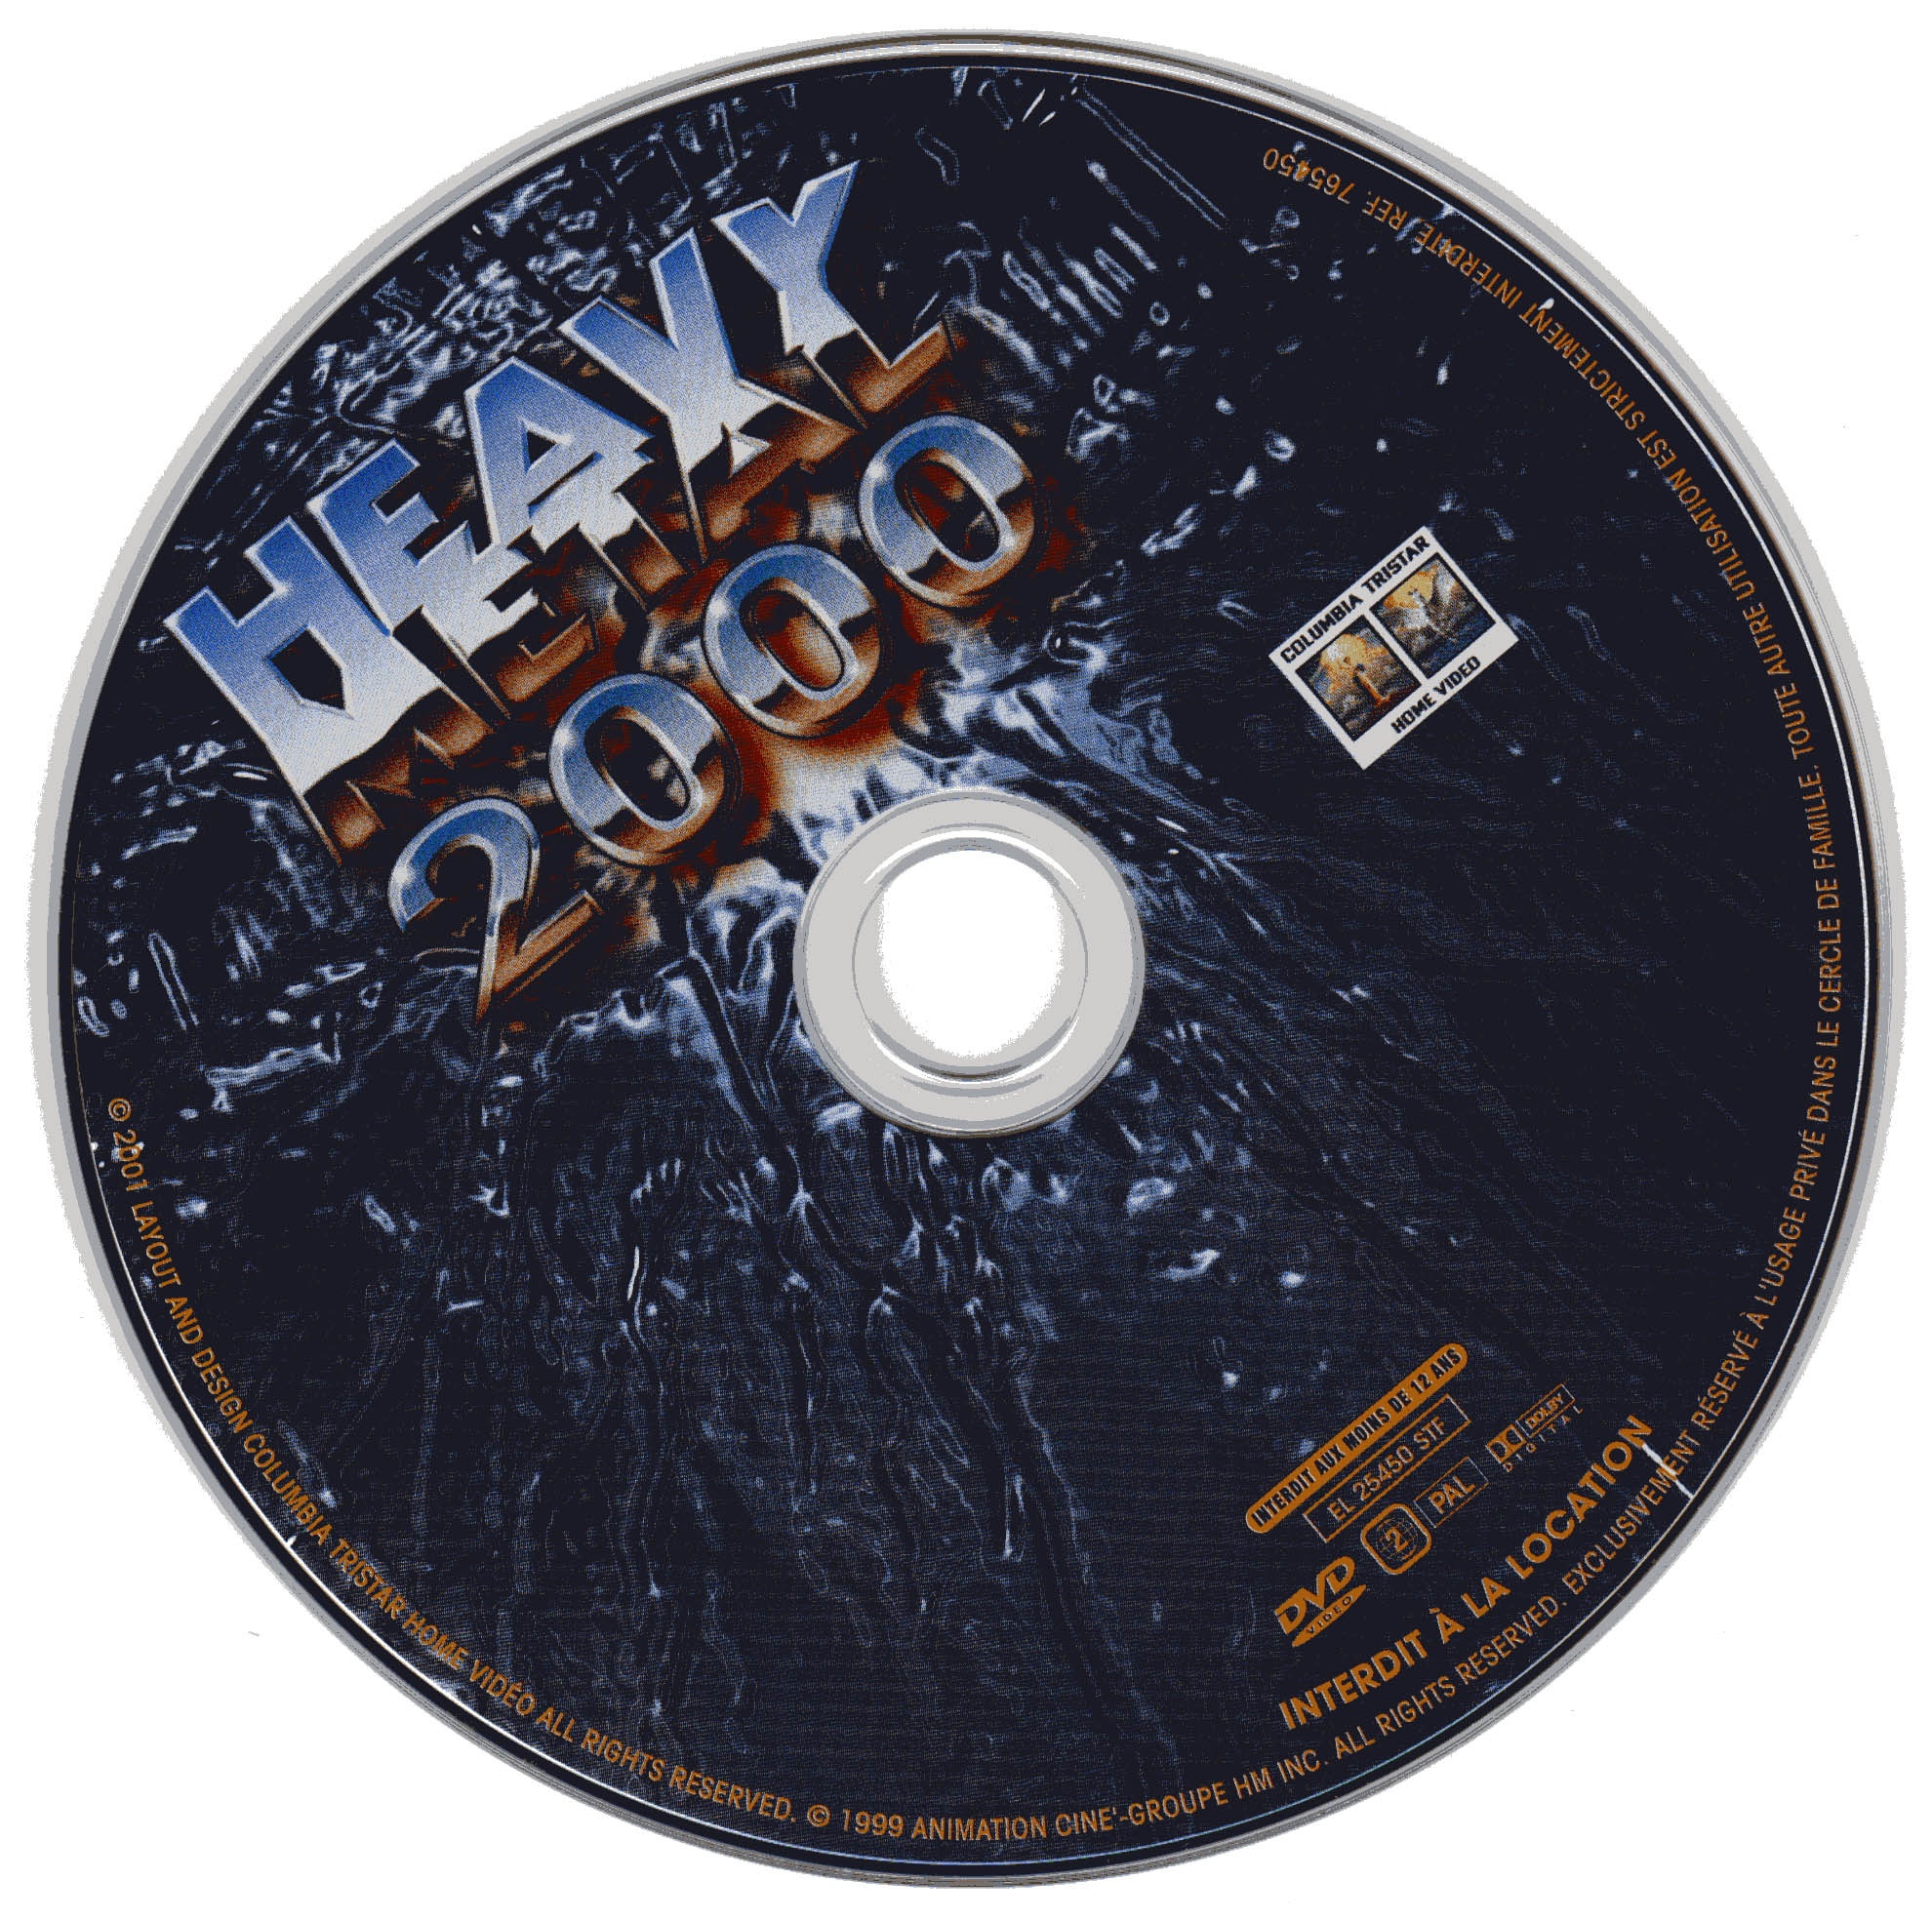 Heavy metal 2000